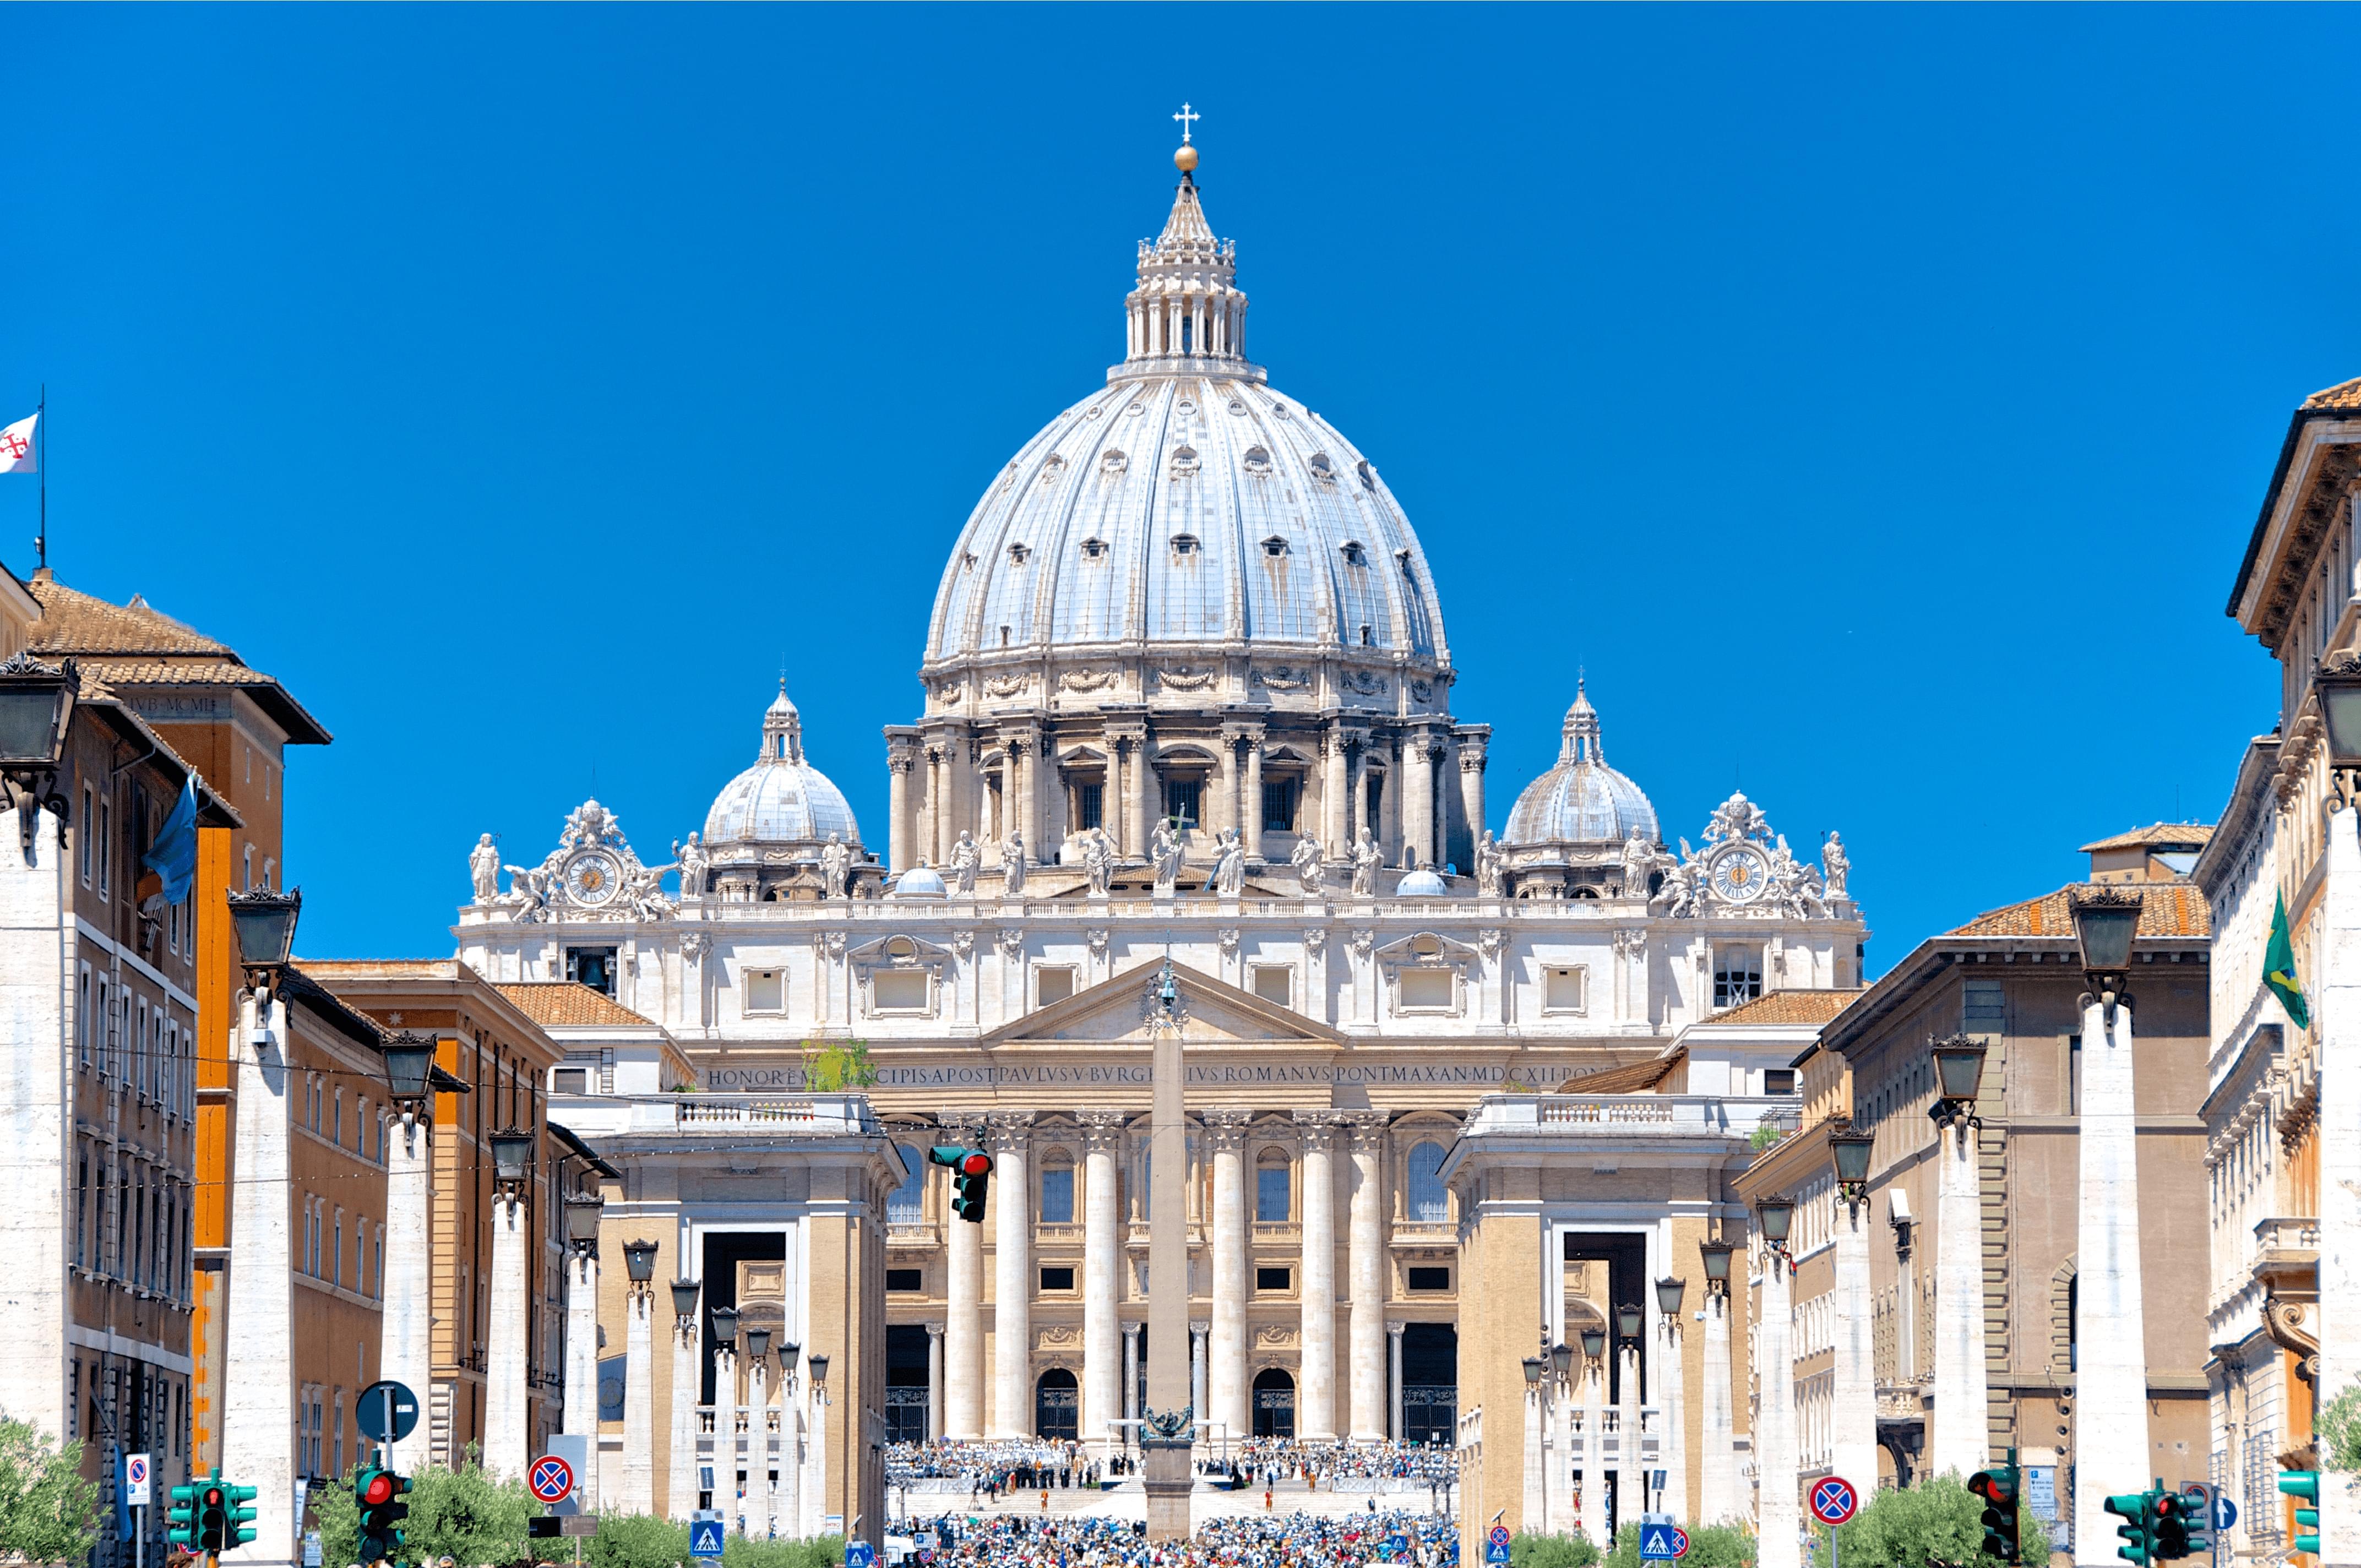 St Peter's Basilica tickets